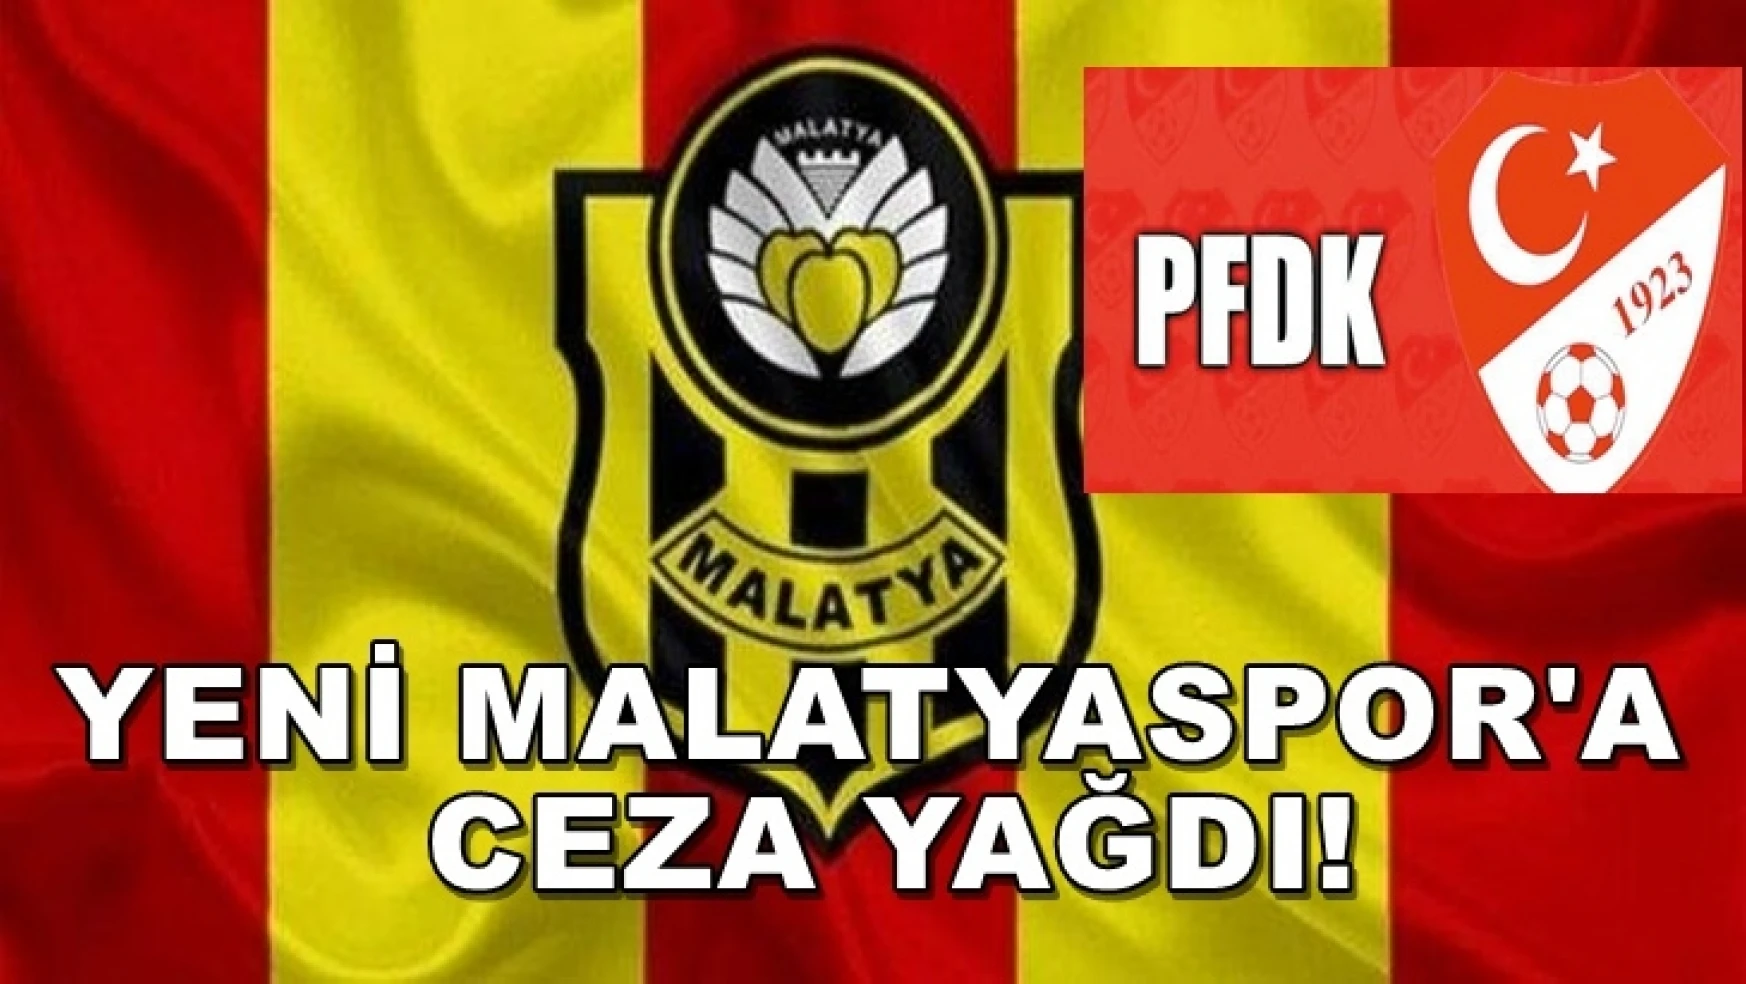 Yeni Malatyaspor'a ceza yağdı!